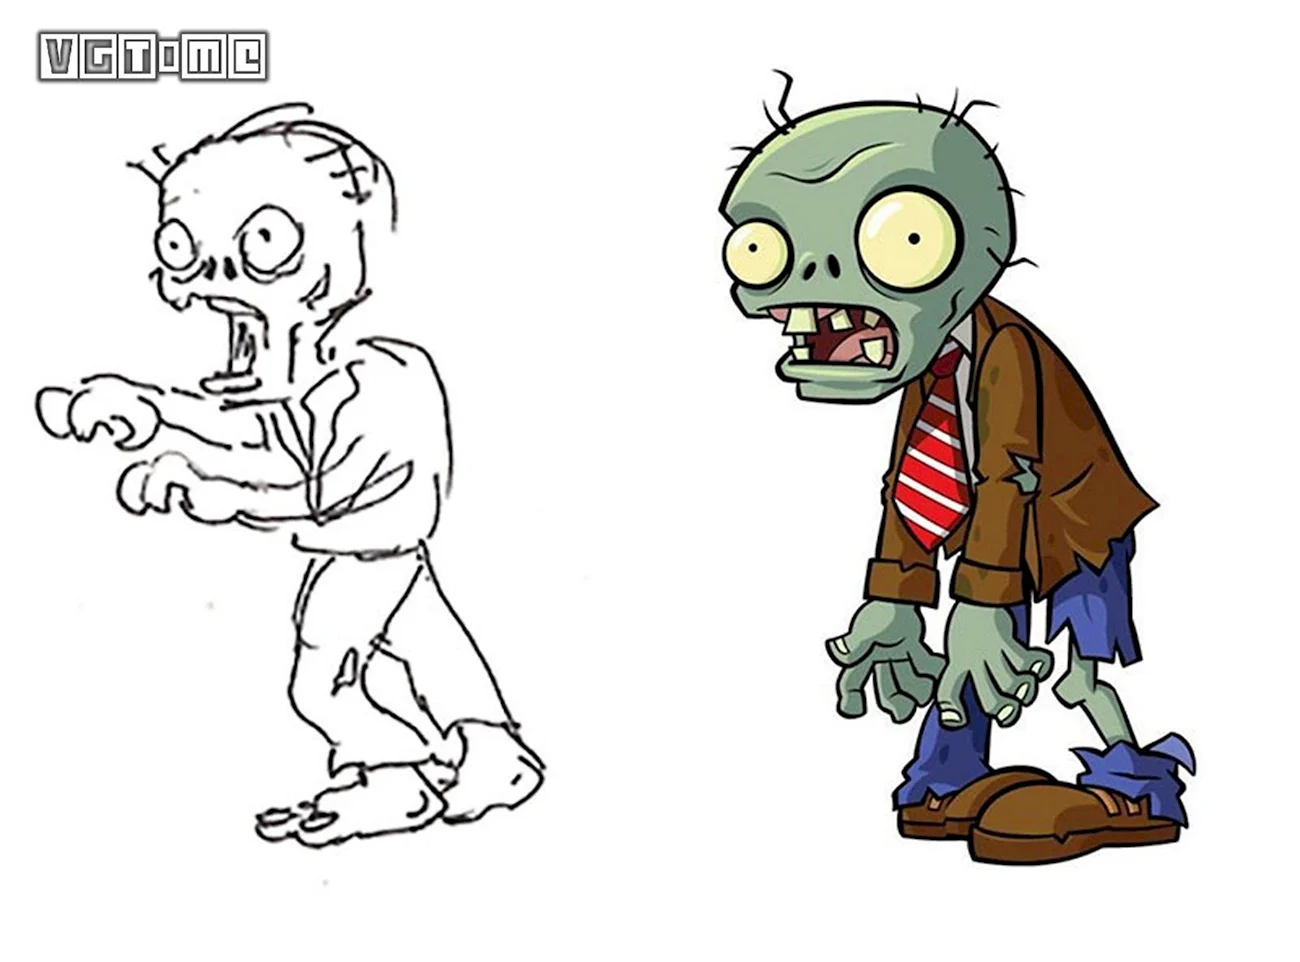 Plants vs Zombies зомби. Картинка из мультфильма